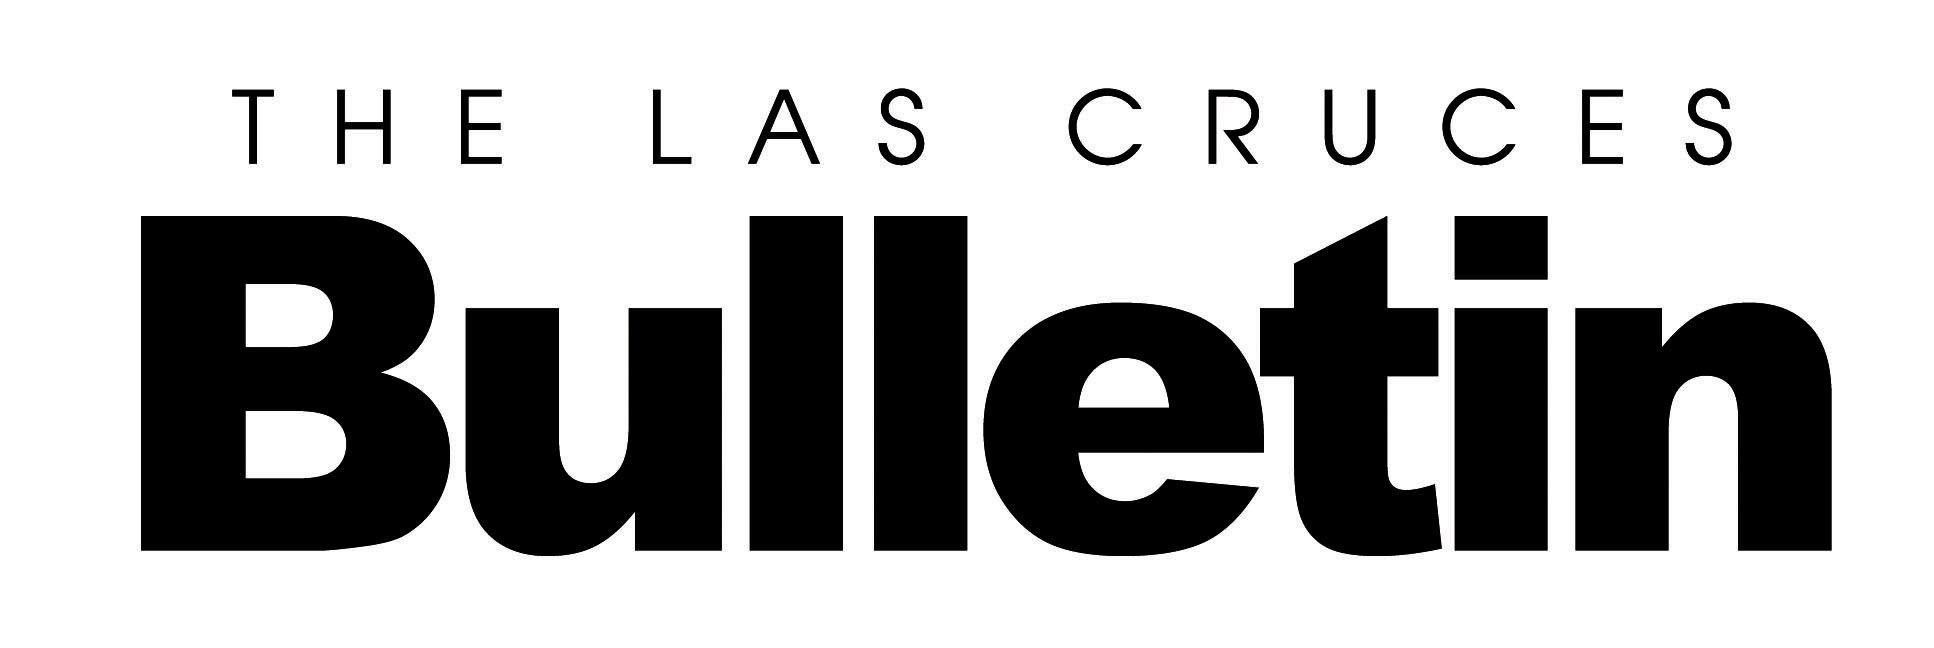 Las Logo - Bulletin logo | Las Cruces Bulletin